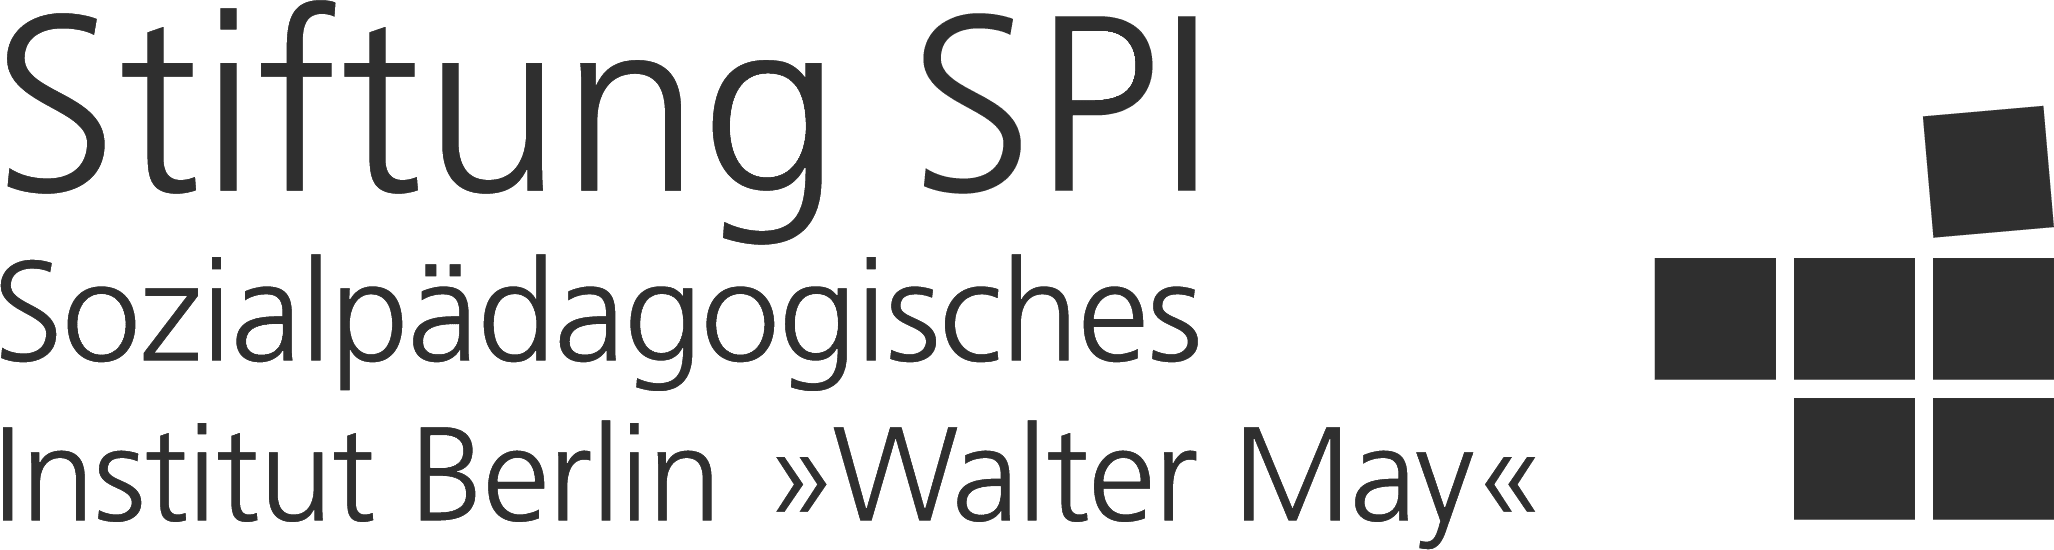 Stiftung SPI + logo